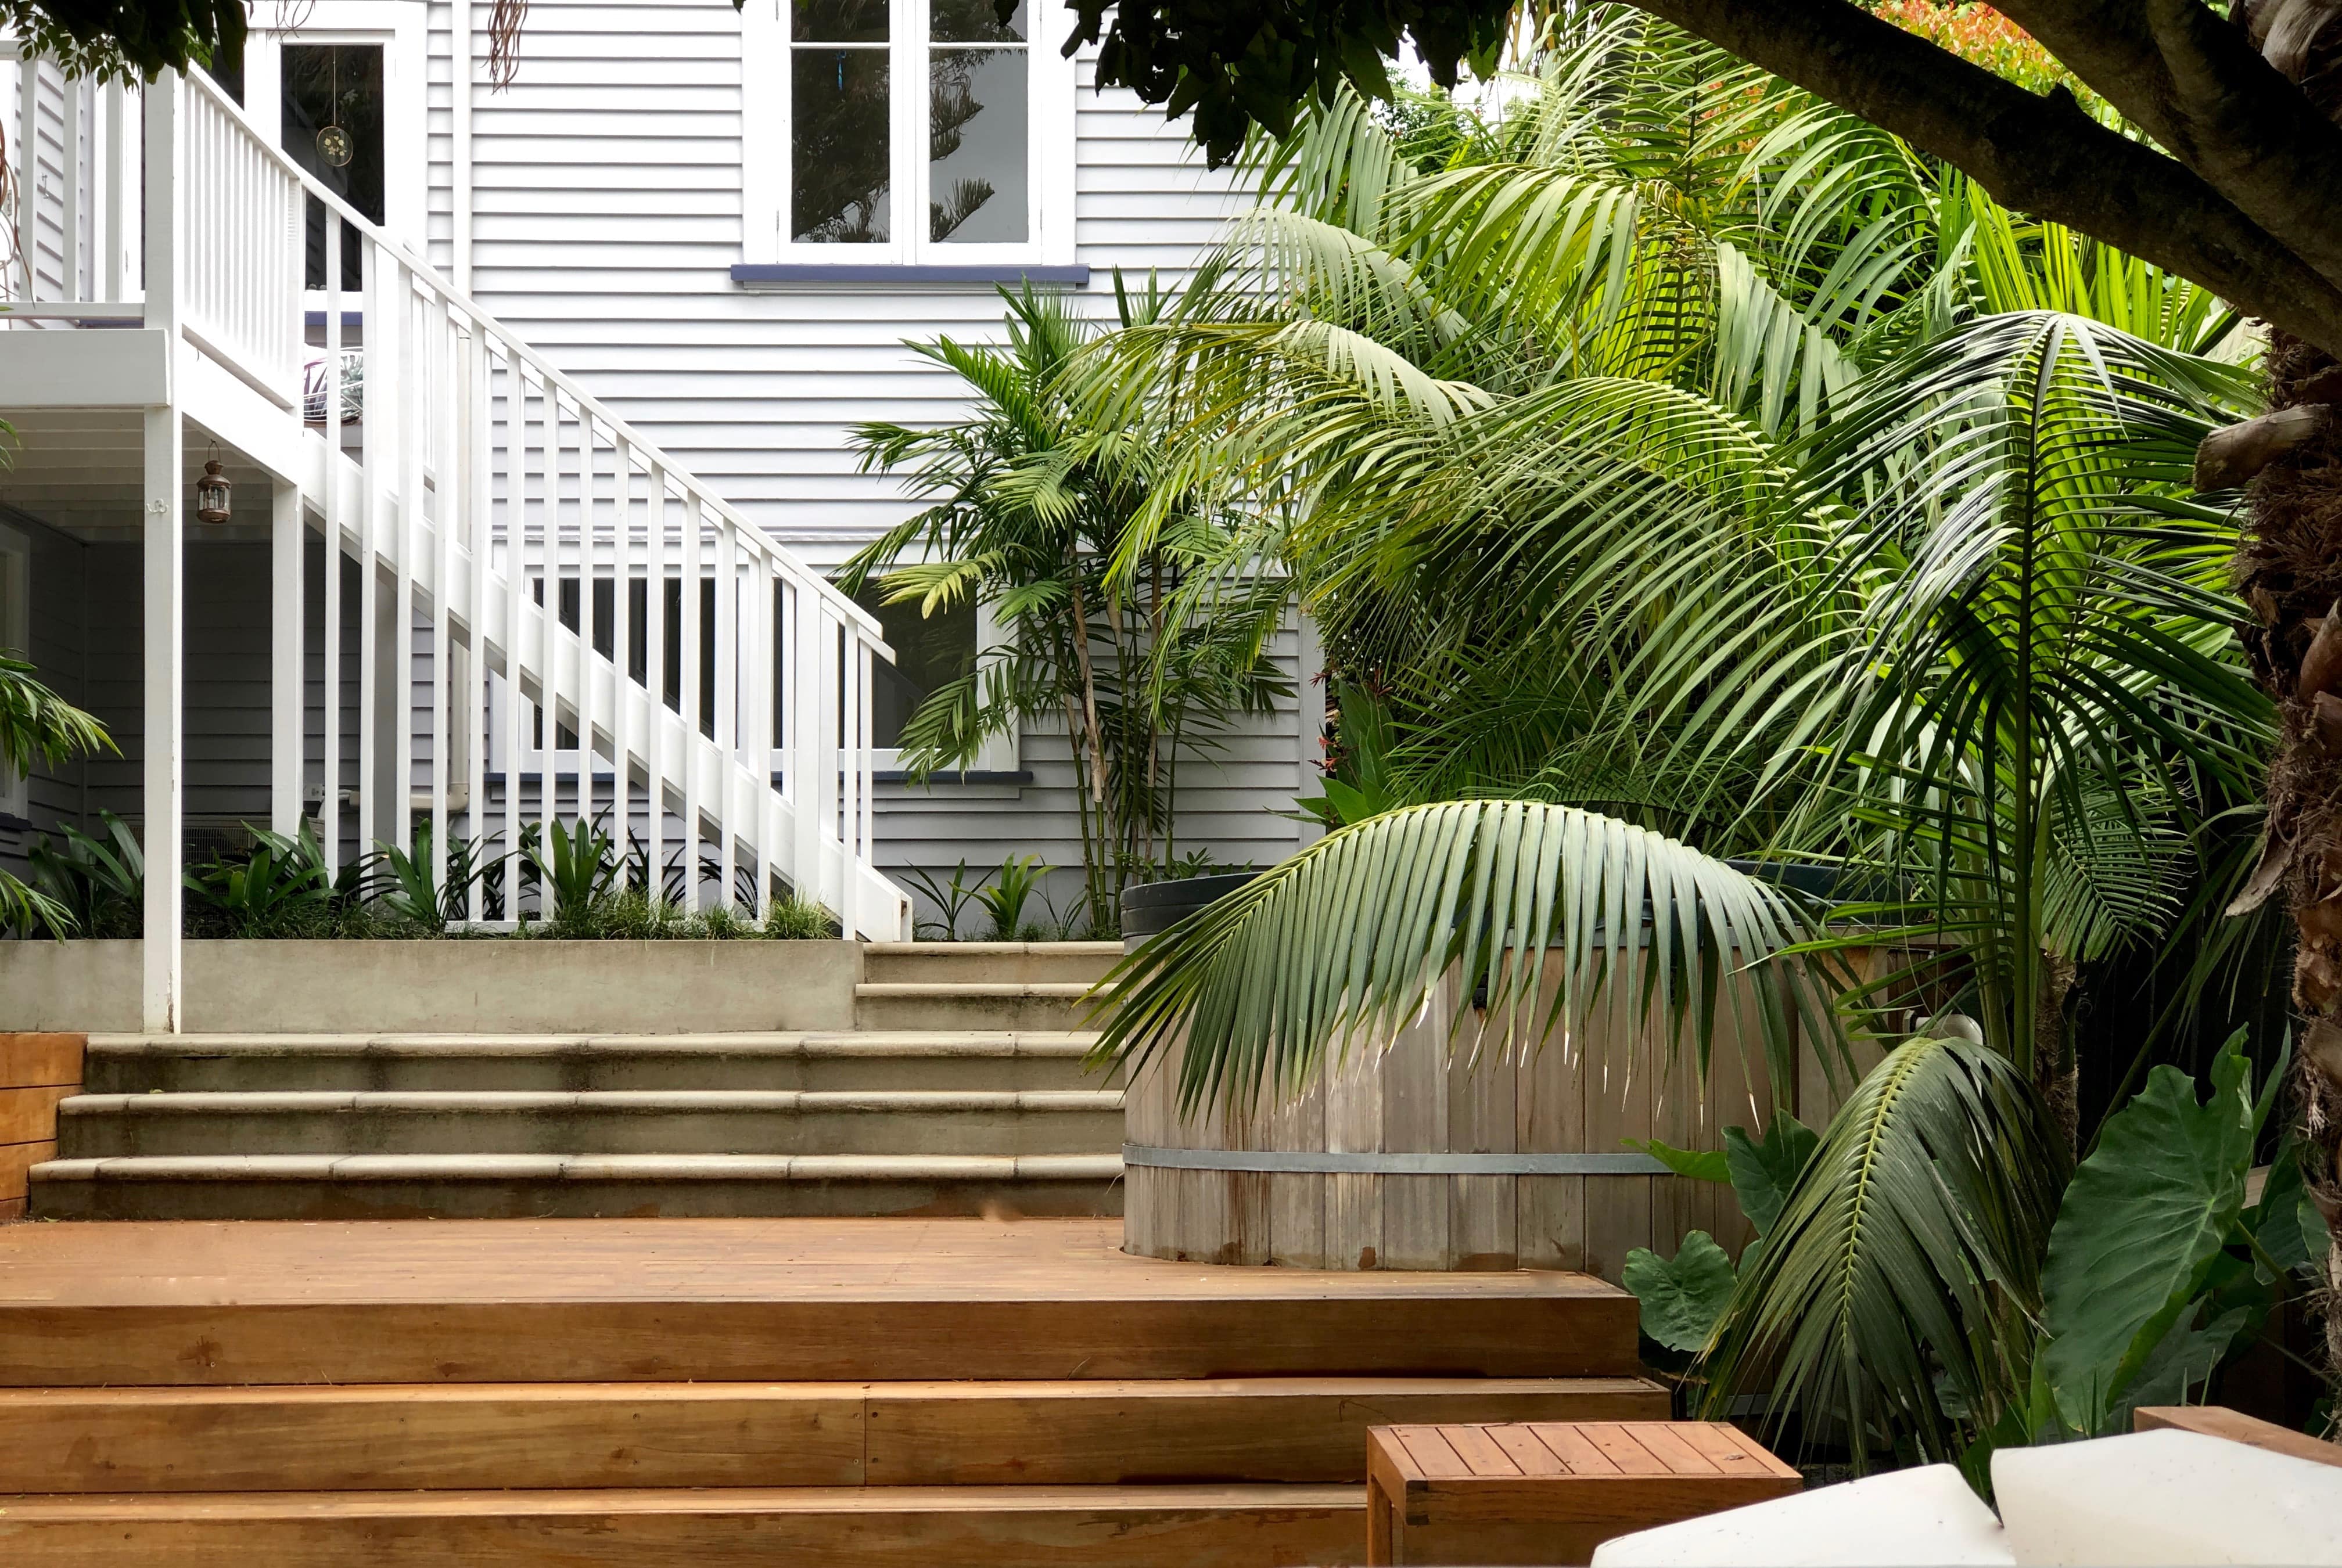 Tropical palm garden design, handrail ideas, Kirsten Sach Landscapes